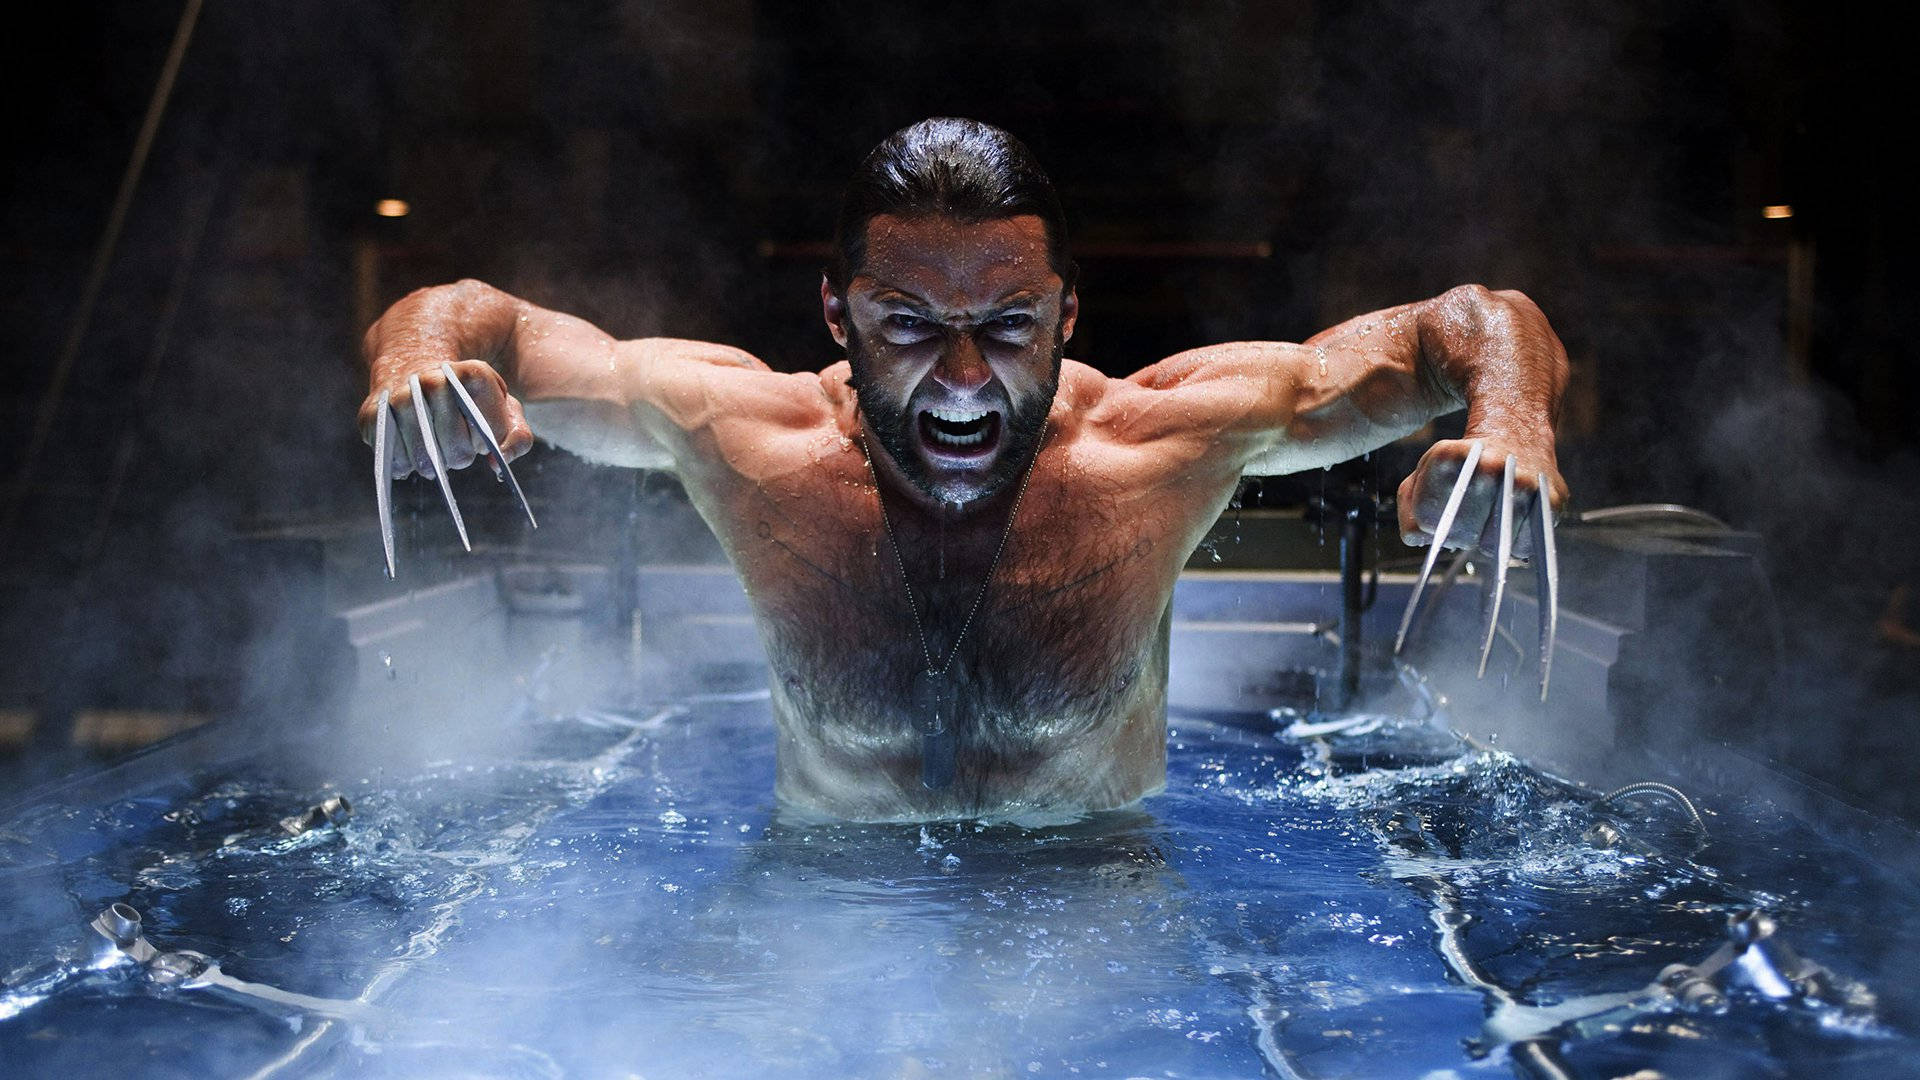 X-men Wolverine In Water Wallpaper